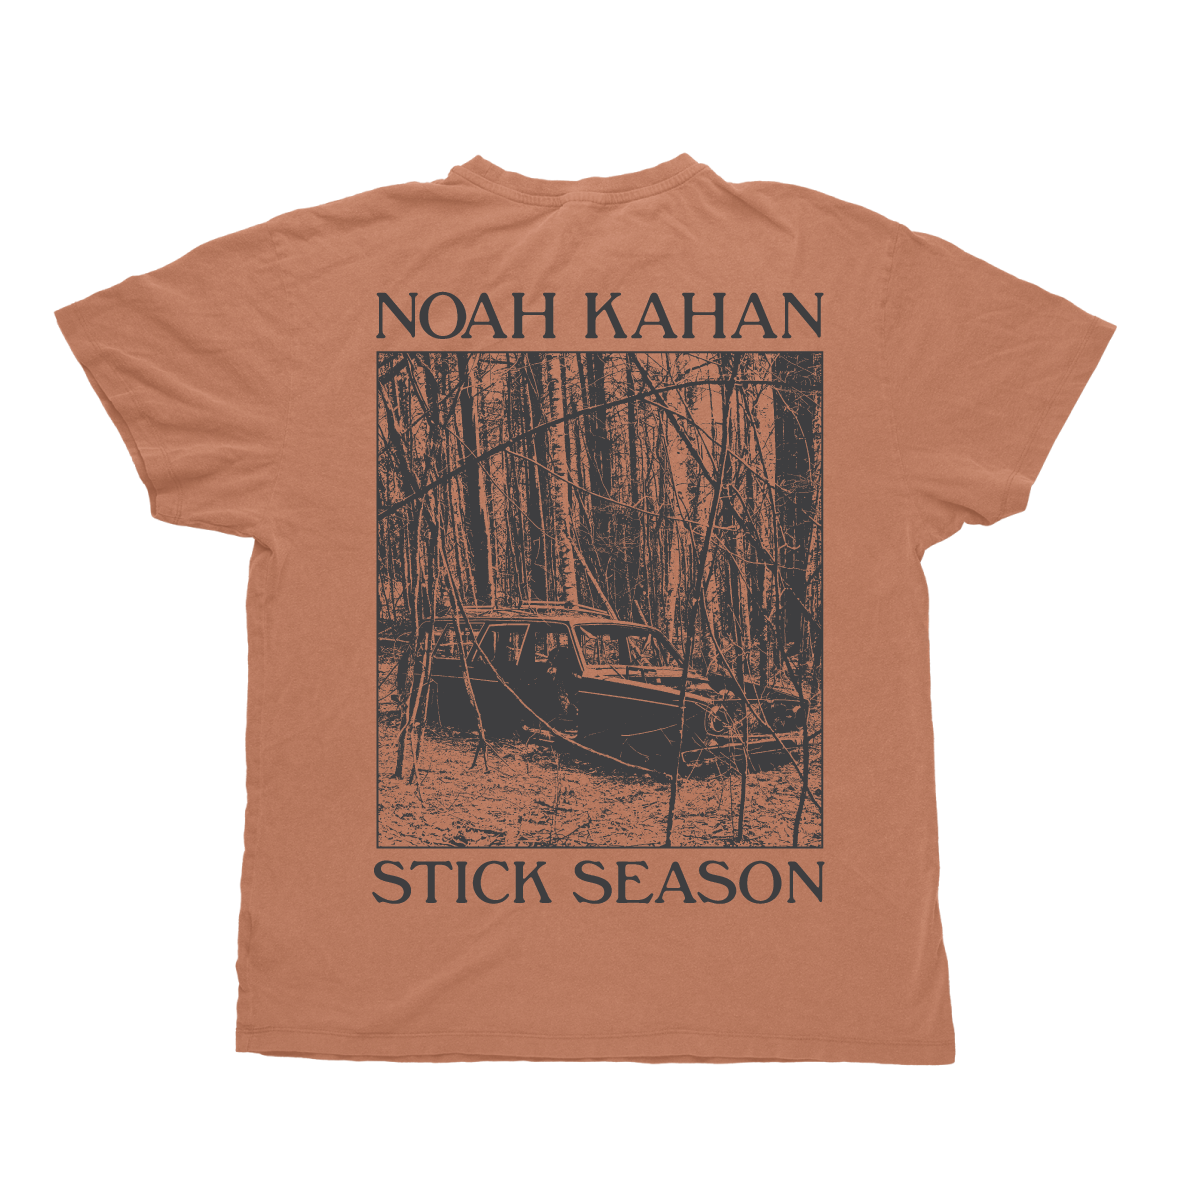 Noah Kahan Stick Season short sleeve t-shirt on Comfort Colors Yam. Pigment dyed burnt orange tee with dark grey stick season screen printed artwork.